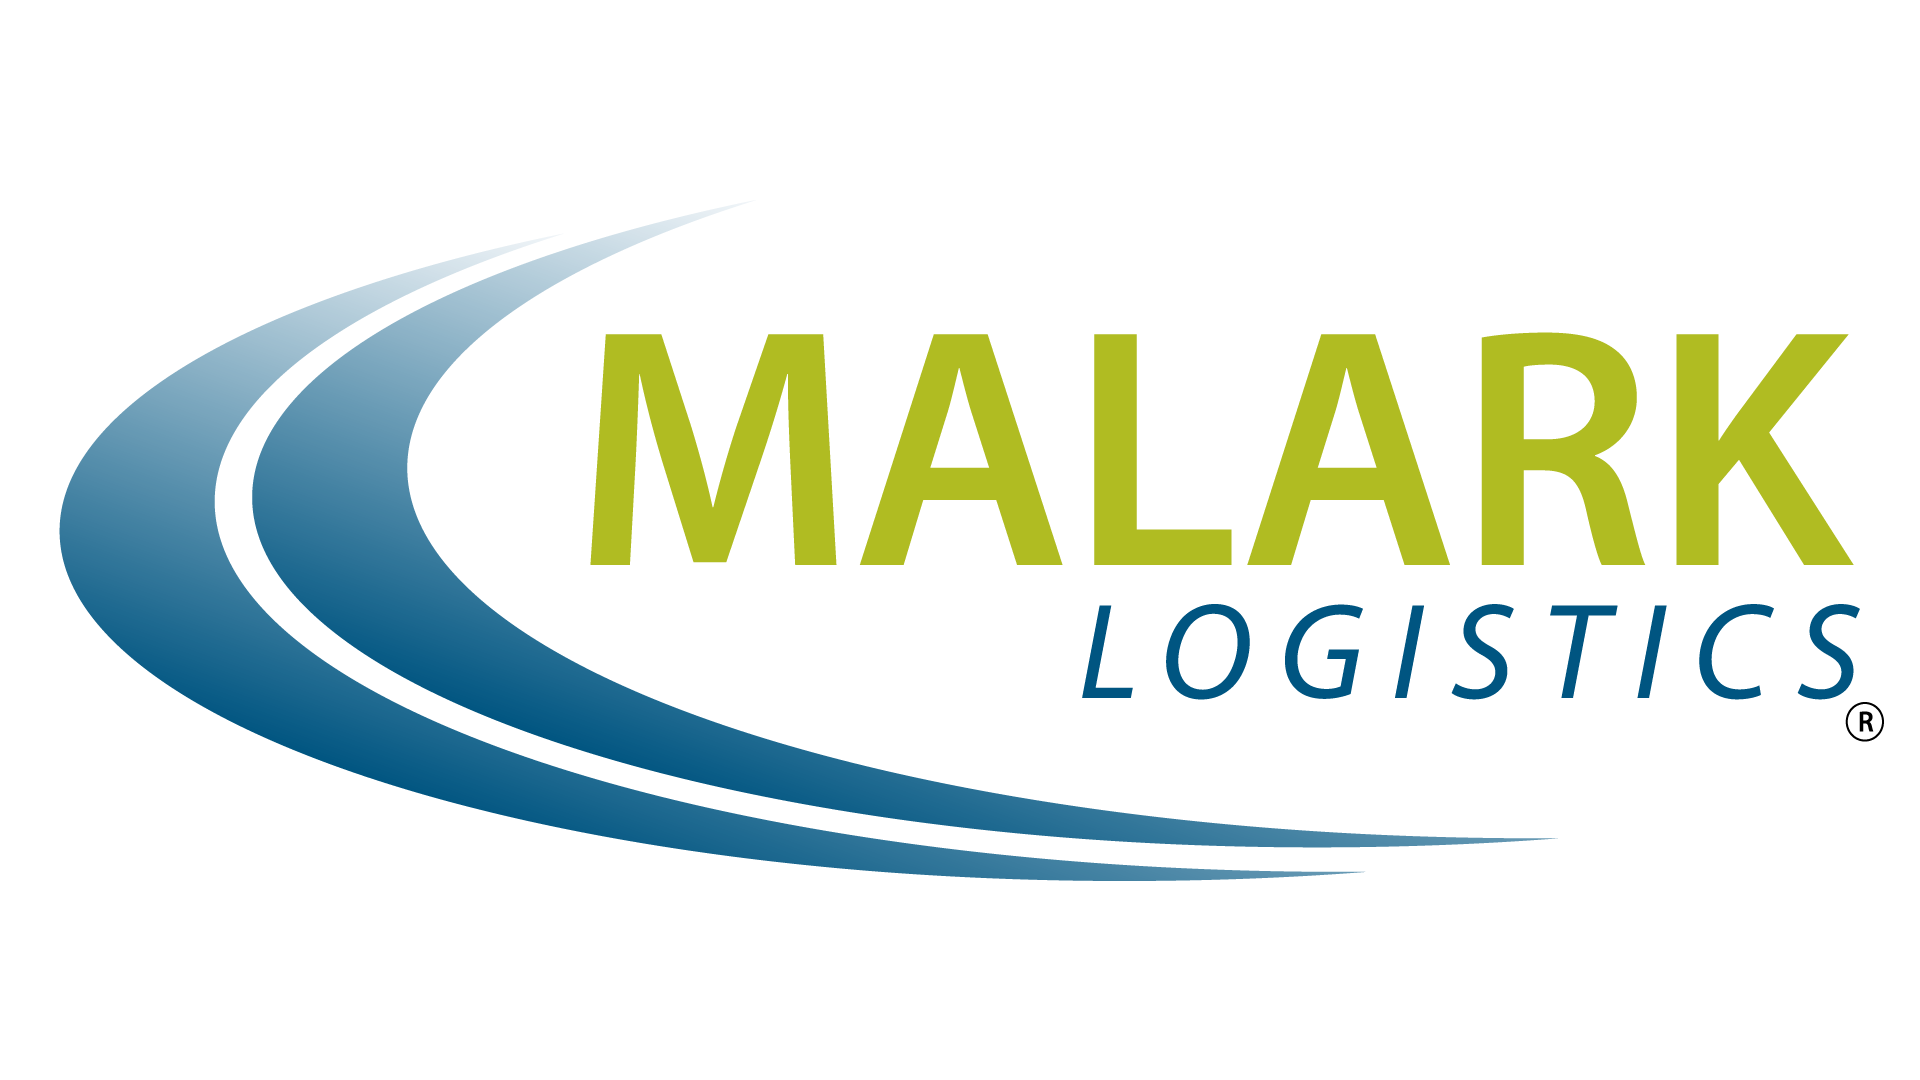 Malark Third-Party Logistics, 3PL Freight Logistics